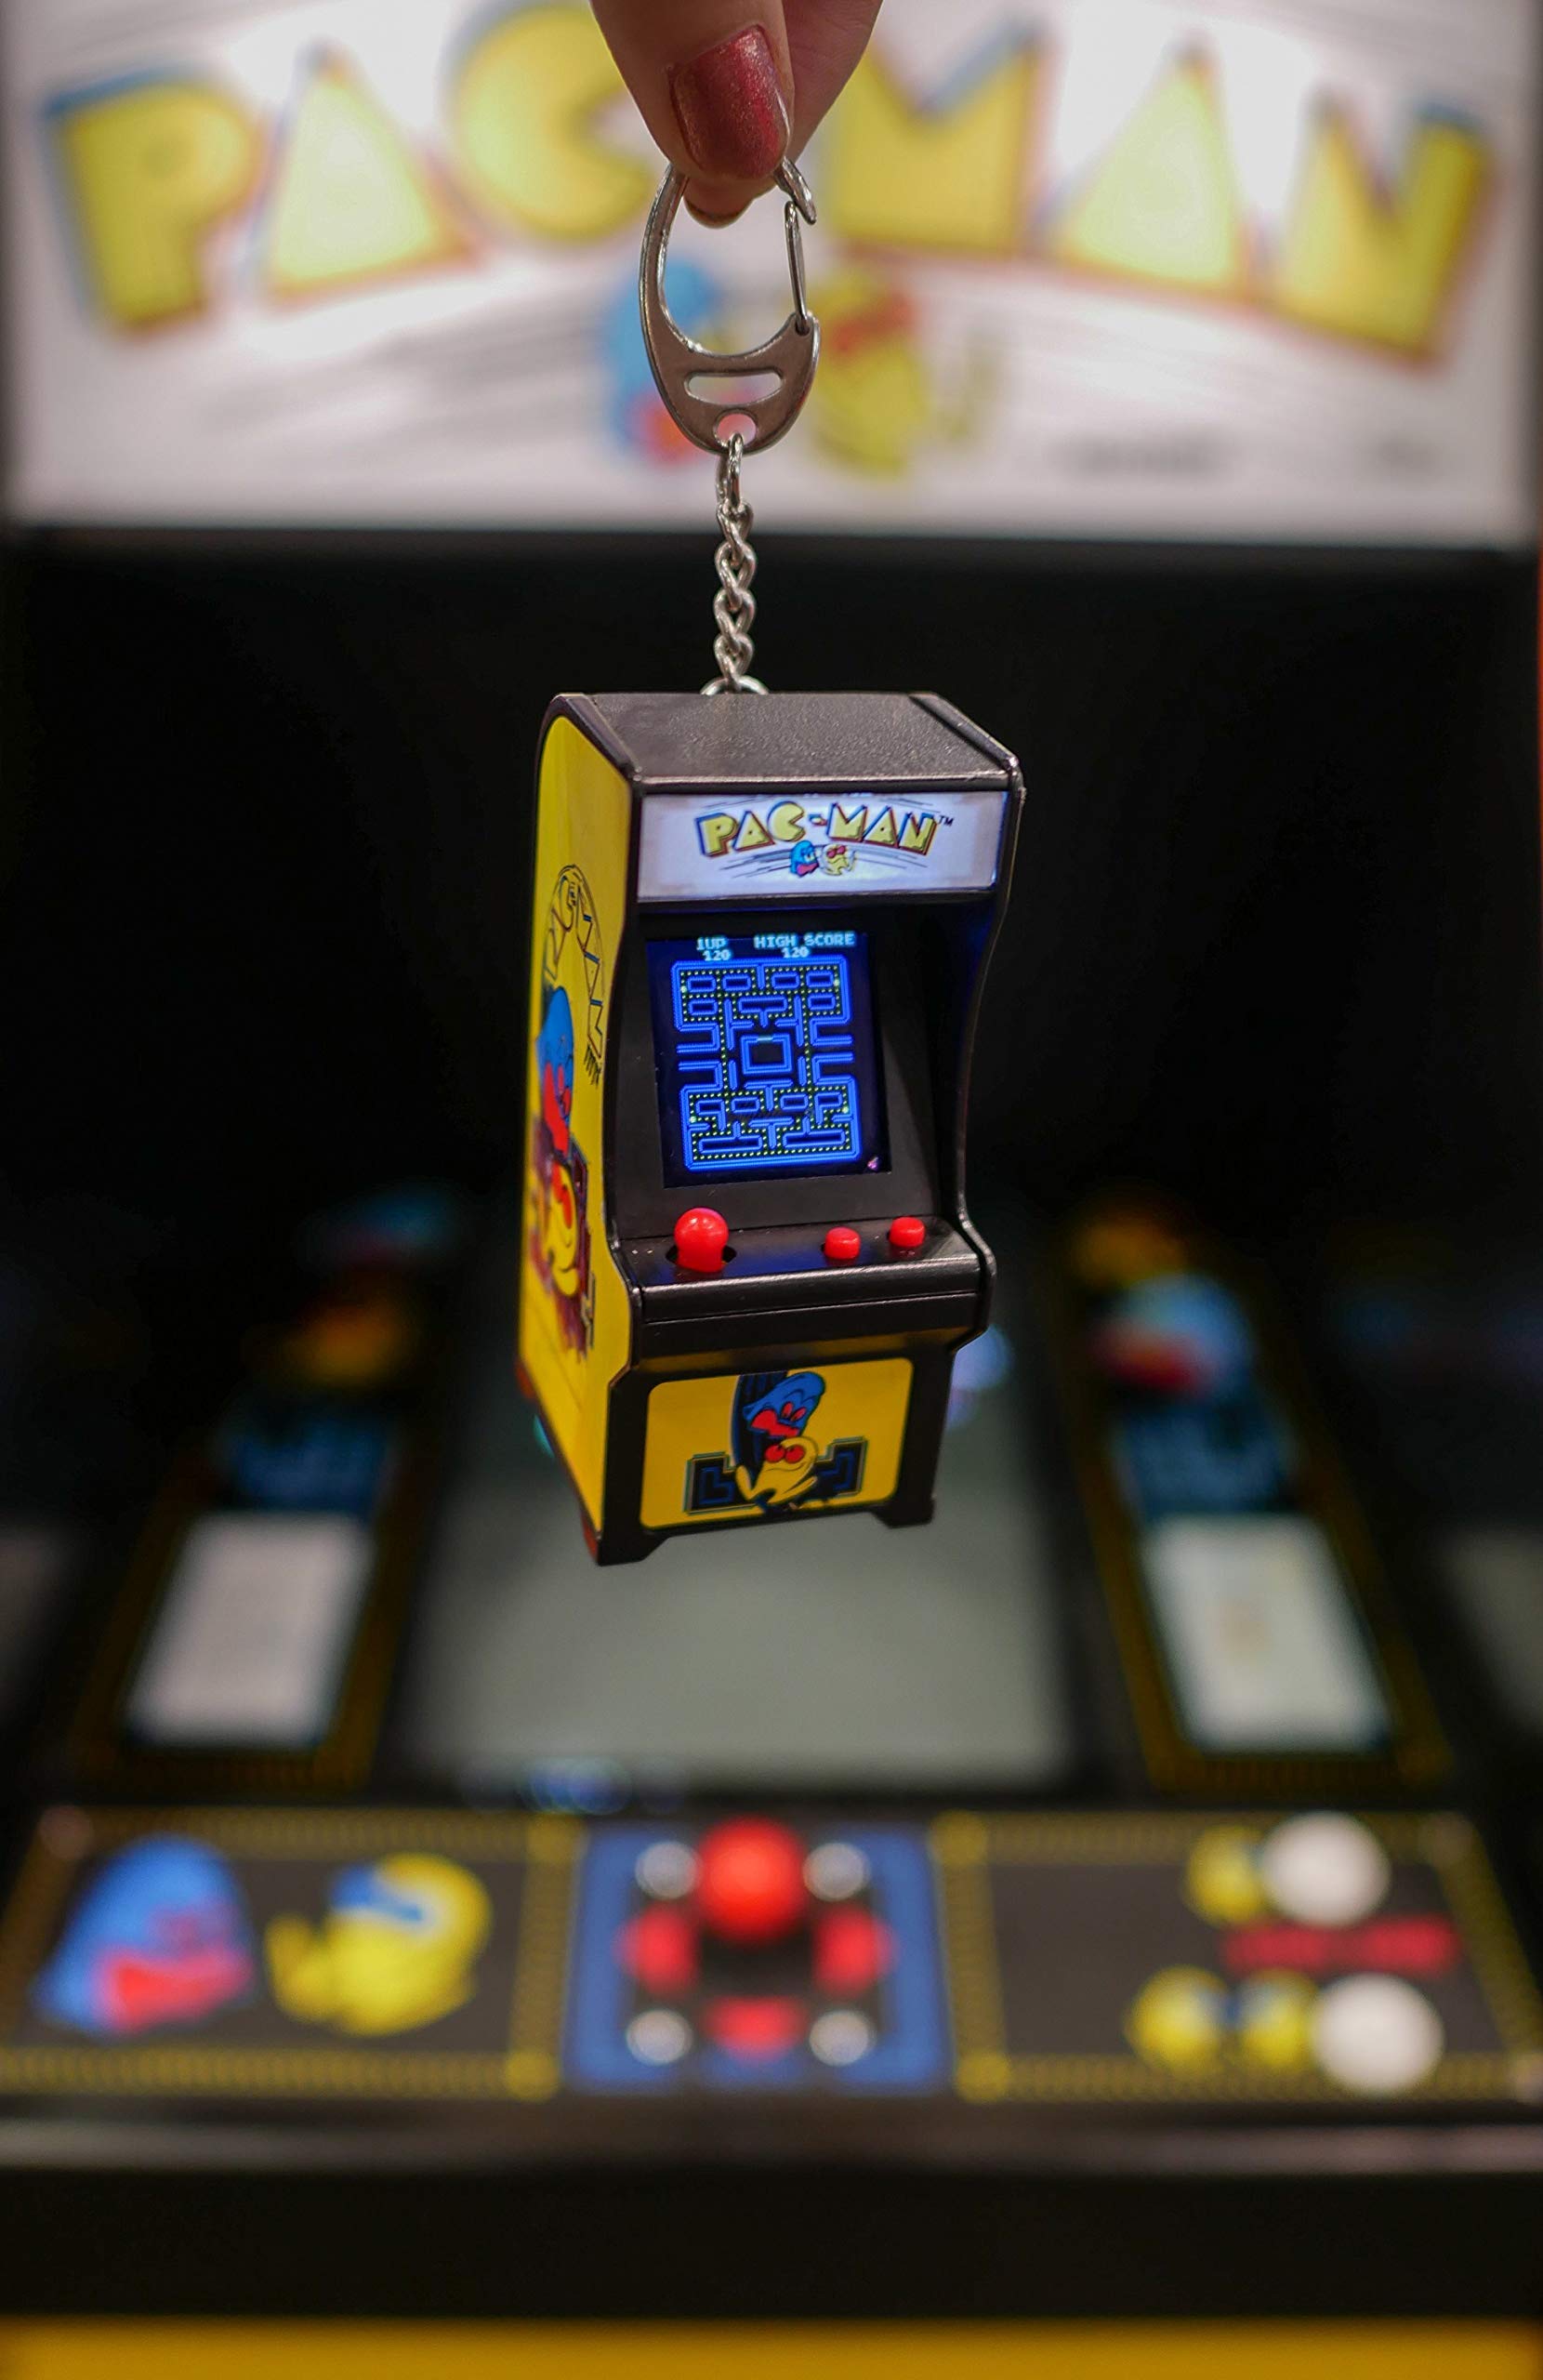 Tiny Arcade Pac-Man Miniature Arcade Game Multi-colored